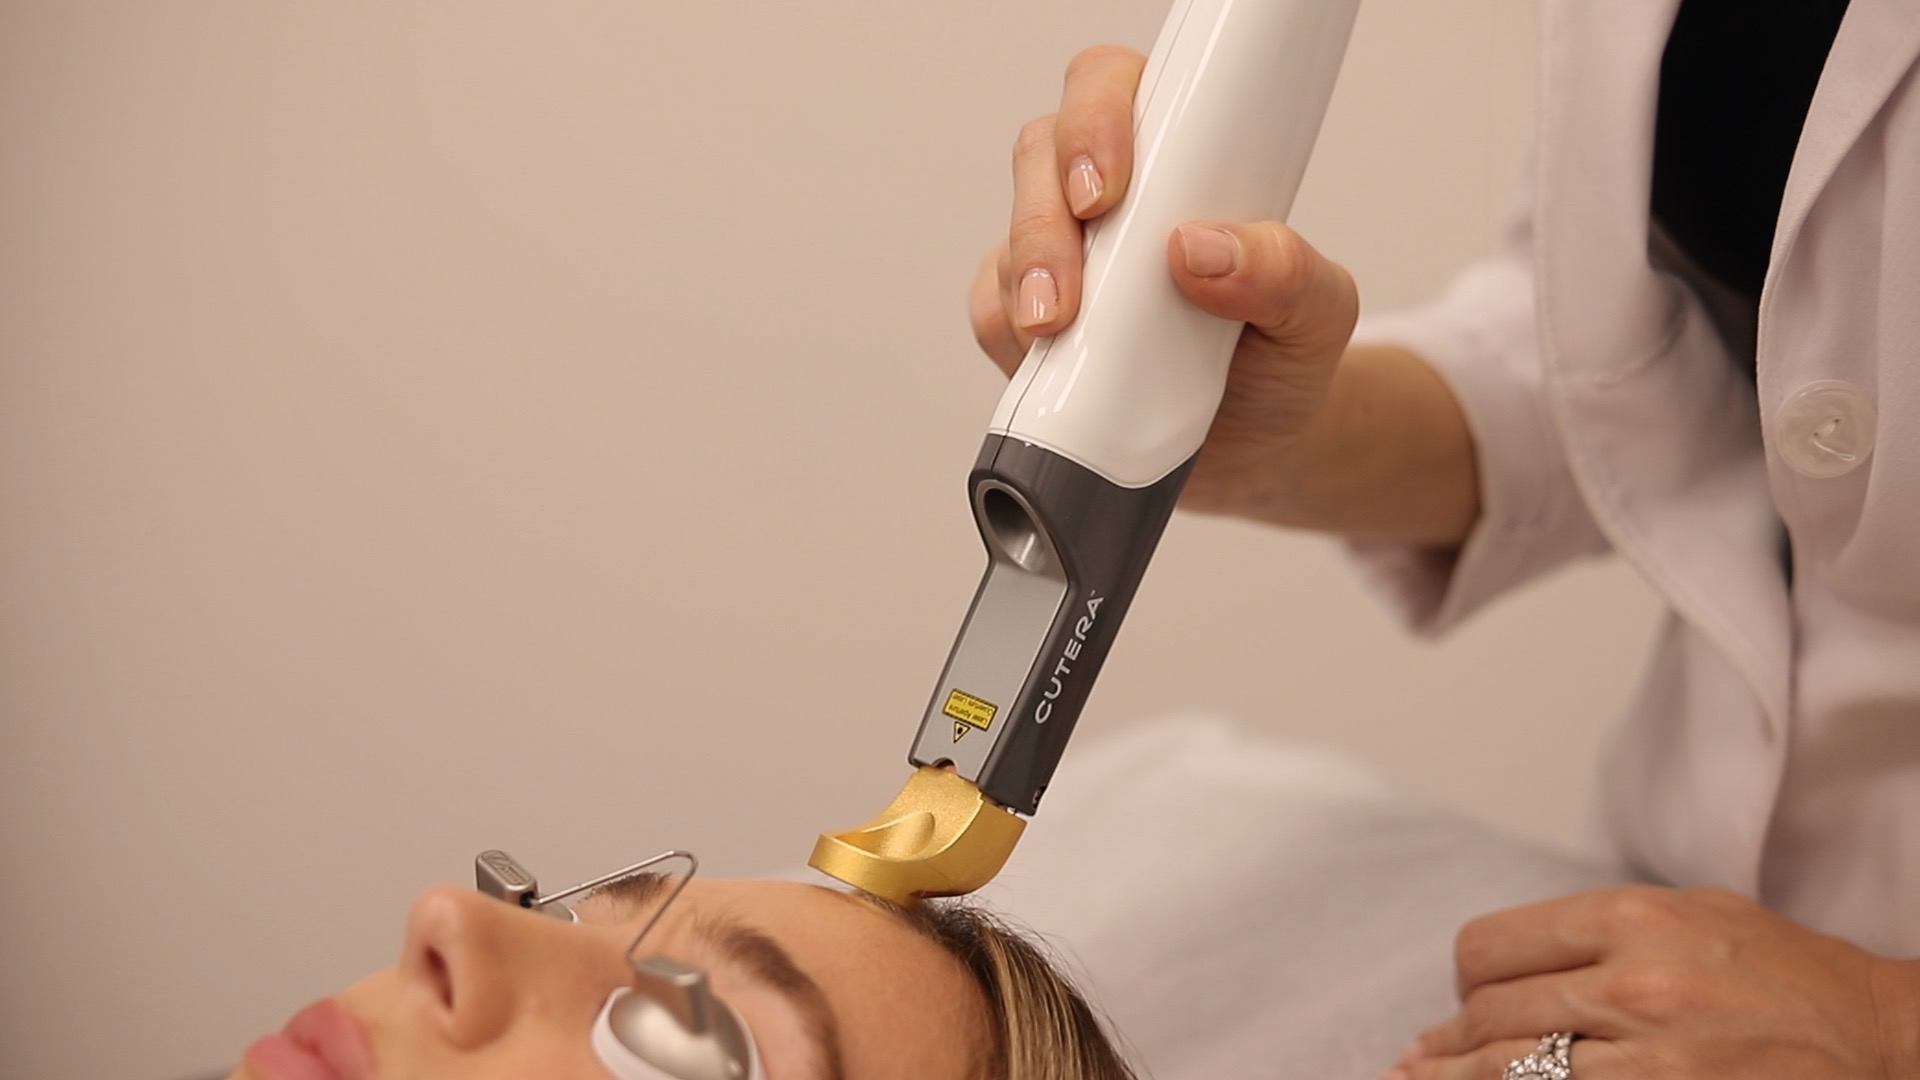 dermatology laser treatment for women